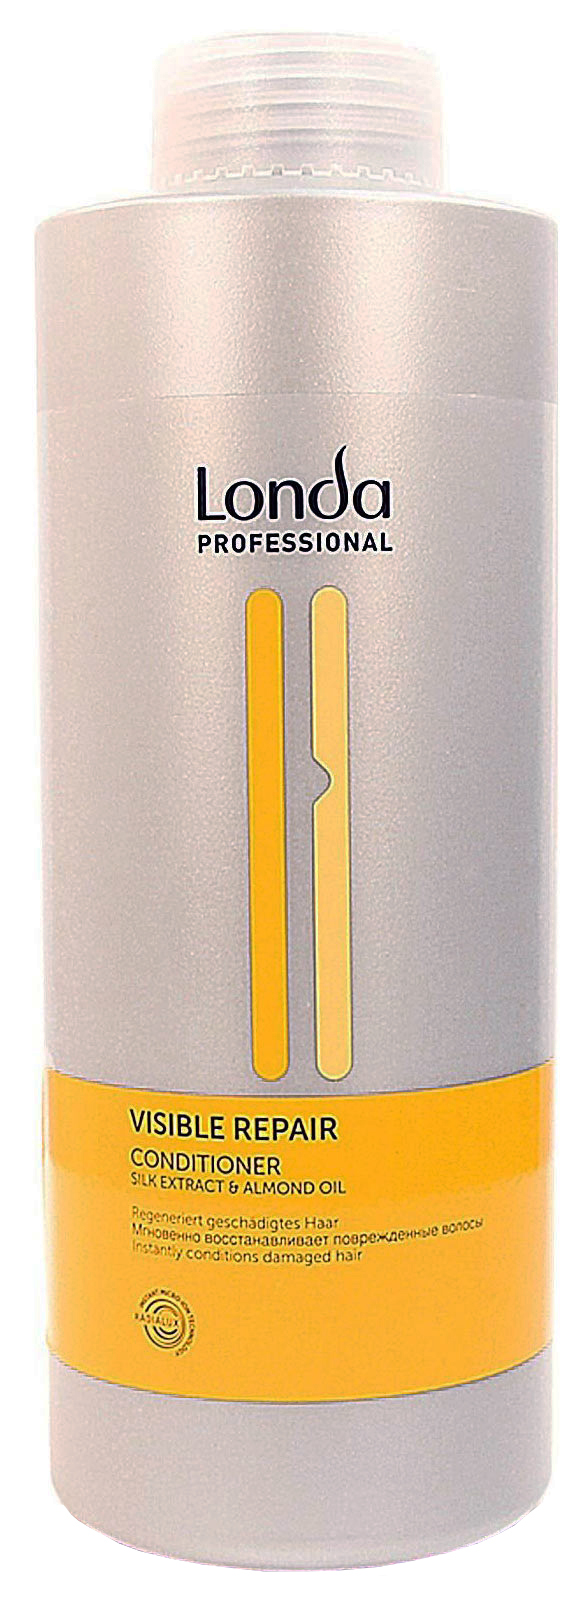 Кондиционер для волос Londa Professional Visible Repair 1000 мл кондиционер для волос londa